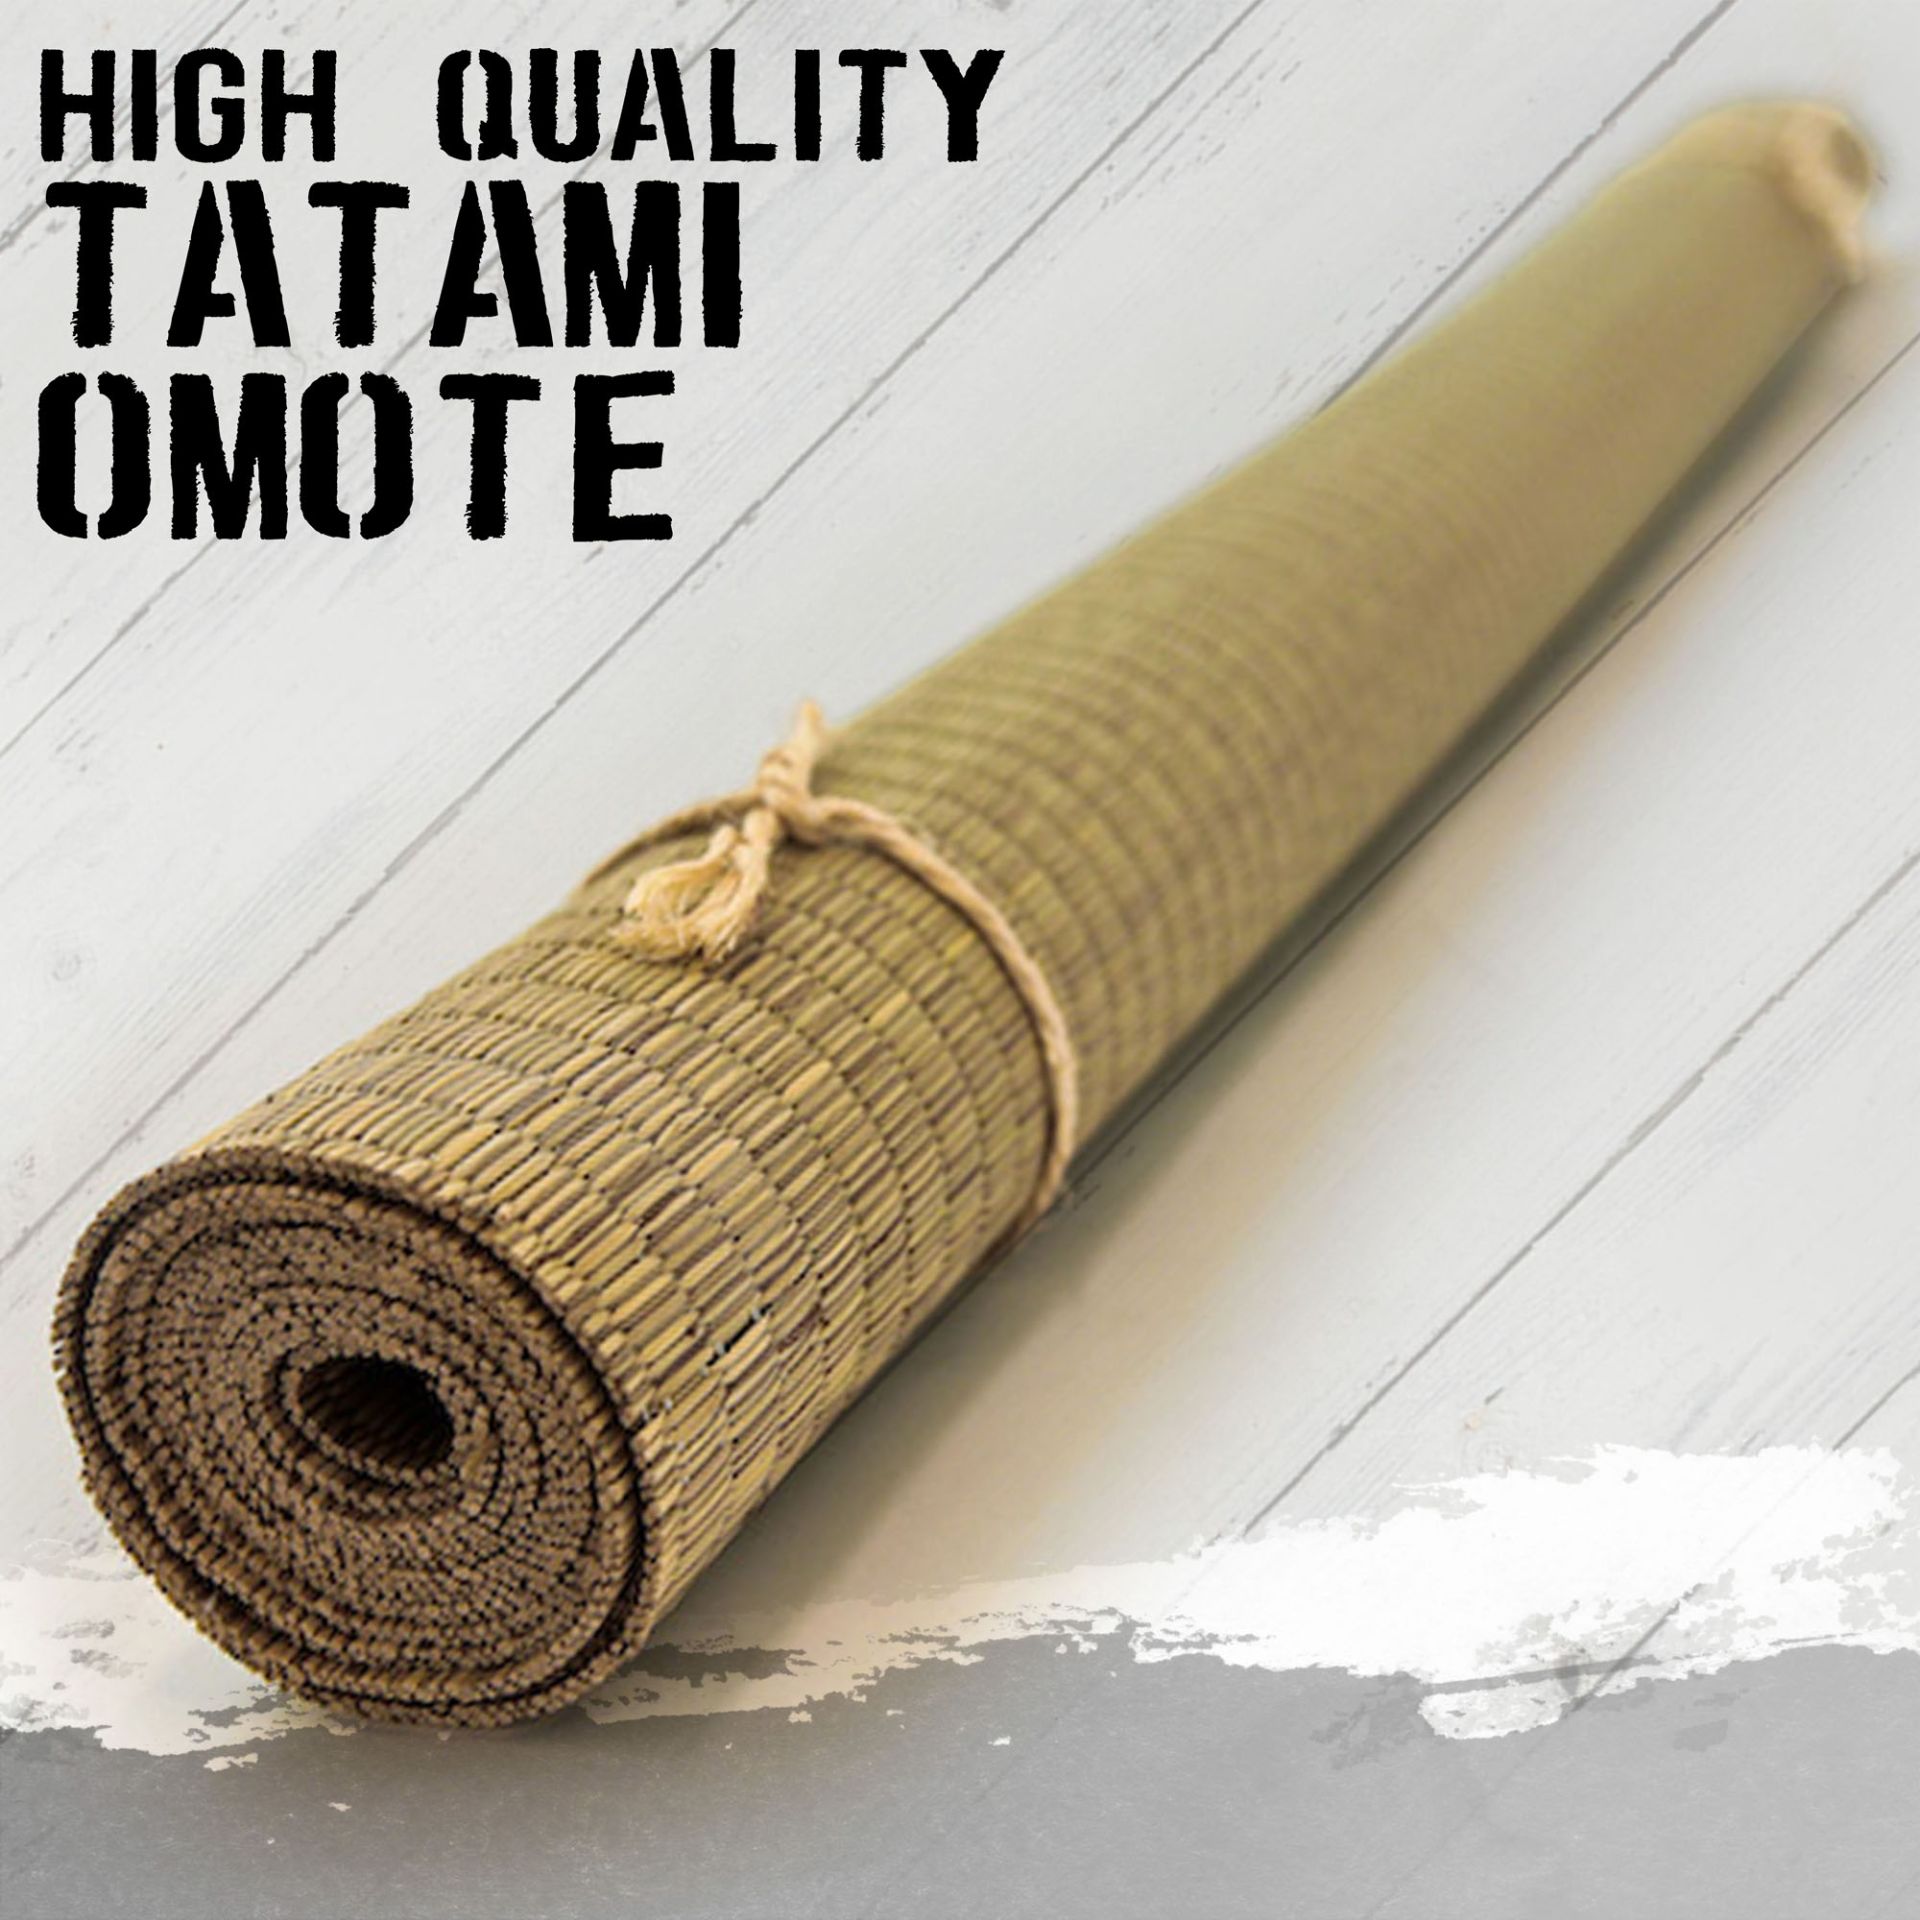 Tatami Omote - high quality - 5 pieces